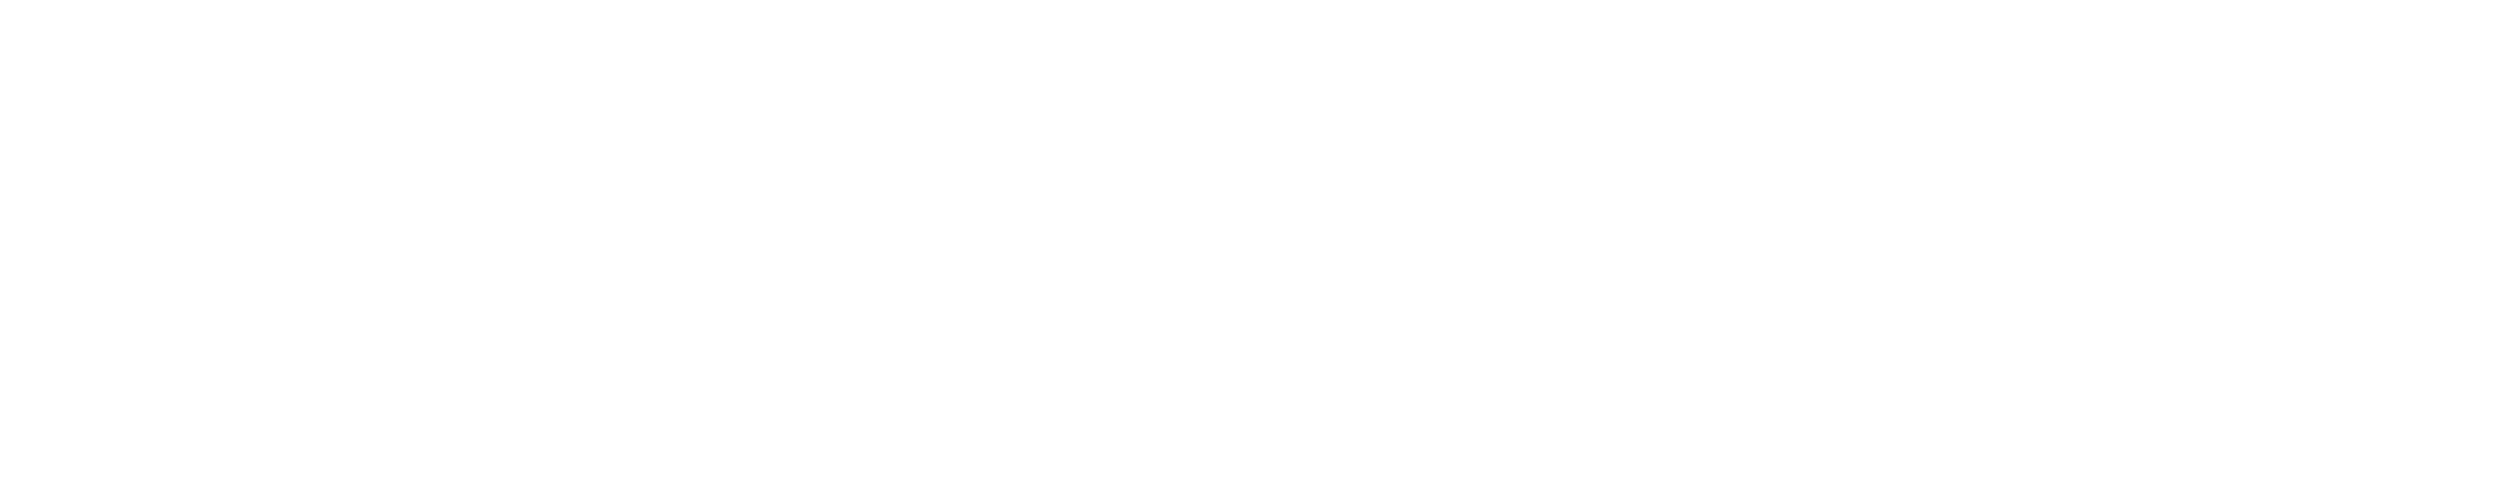 Fujifilm_logo_logotype copy.png